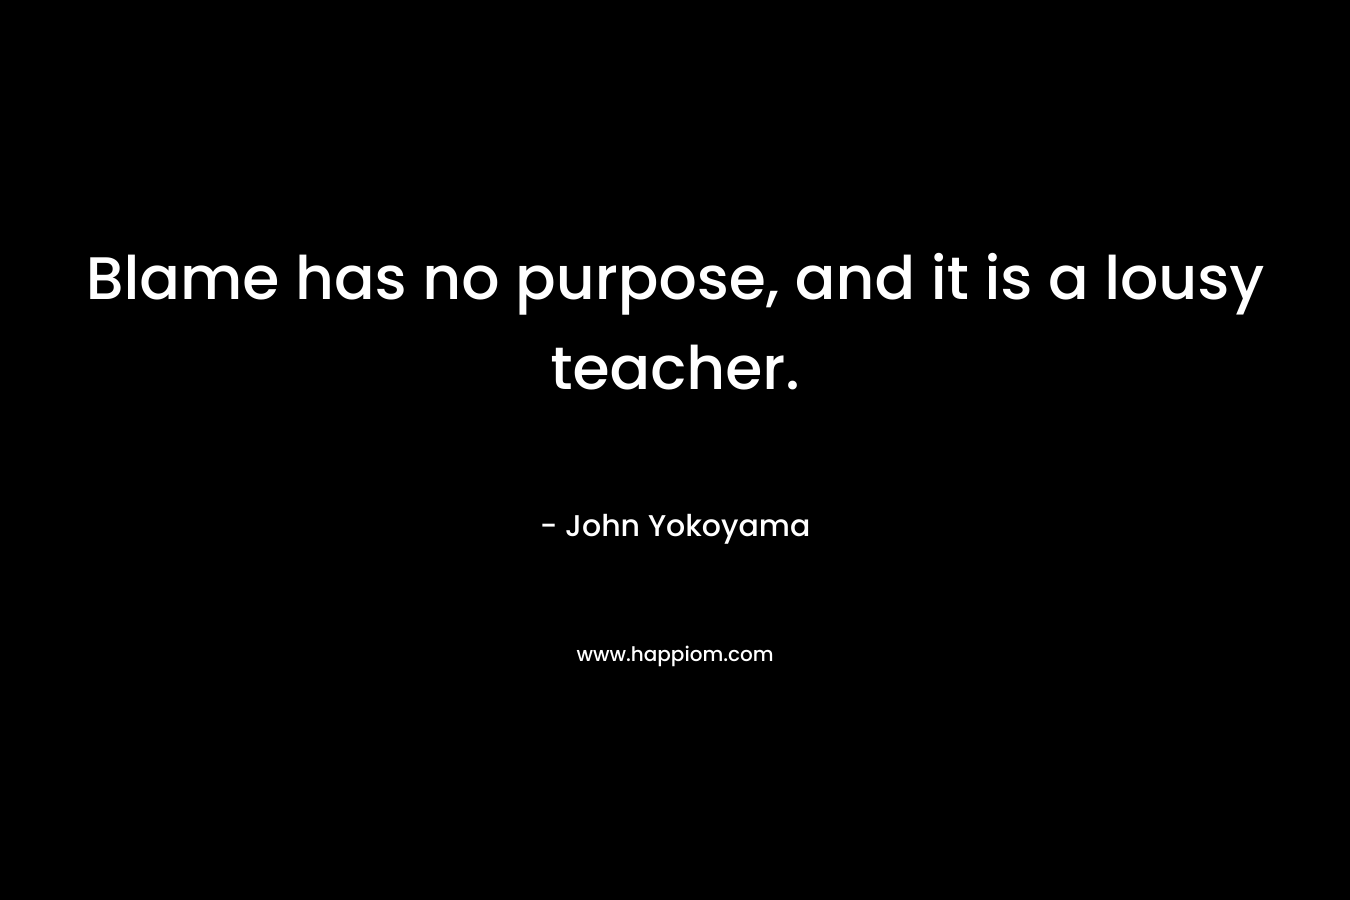 Blame has no purpose, and it is a lousy teacher. – John Yokoyama